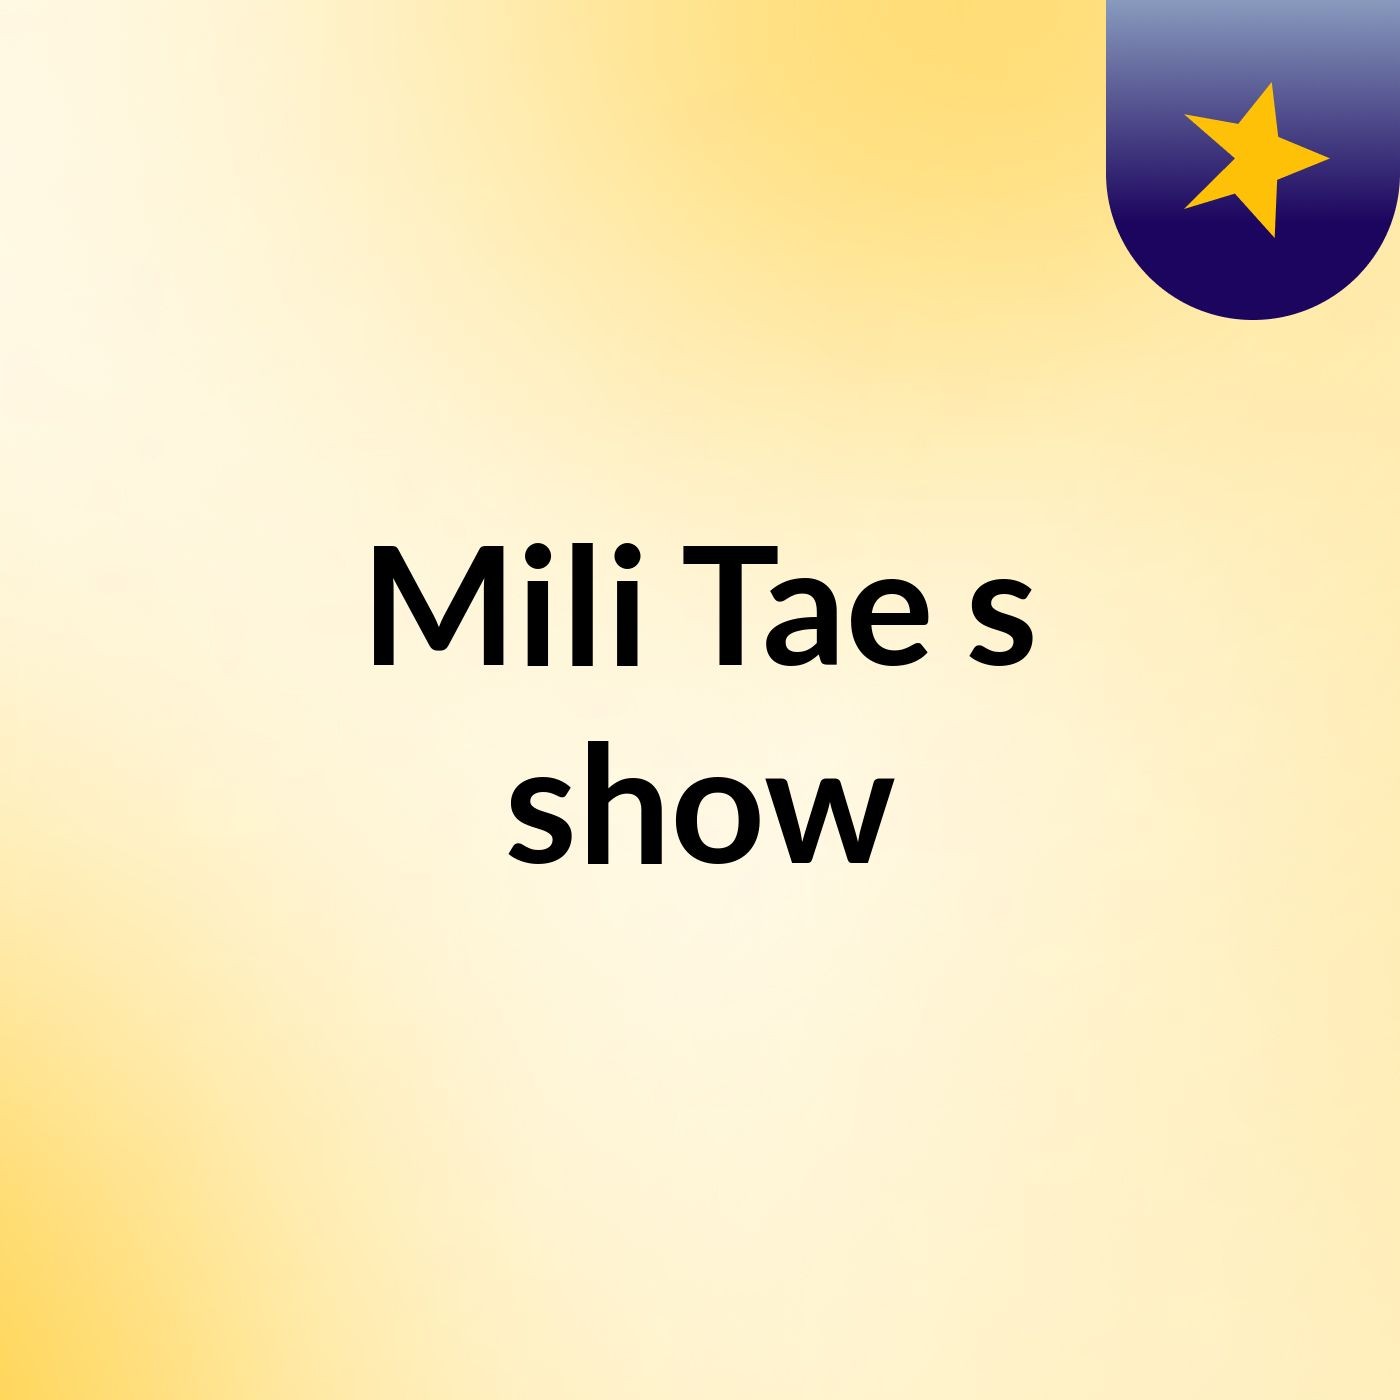 Mili Tae's show